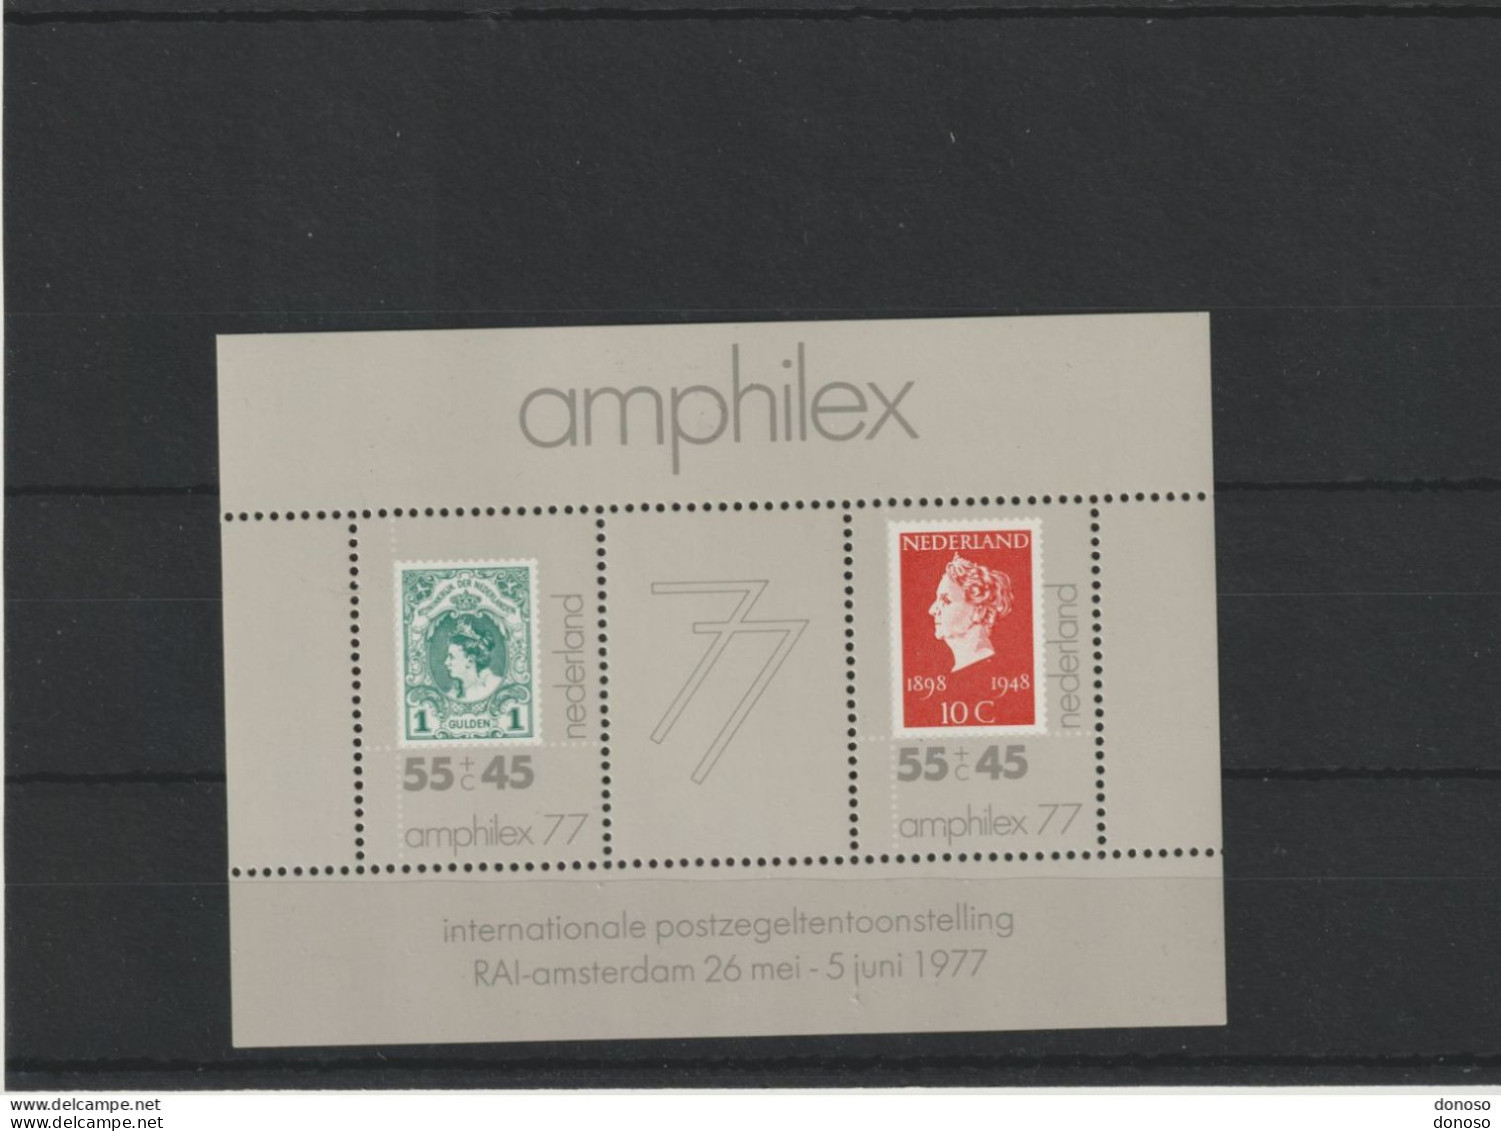 PAYS BAS 1977 Amphilex, Timbres Sur Timbres  Yvert BF 16, Michel Block 16 NEUF** MNH Cote 2,50 Euros - Blocs